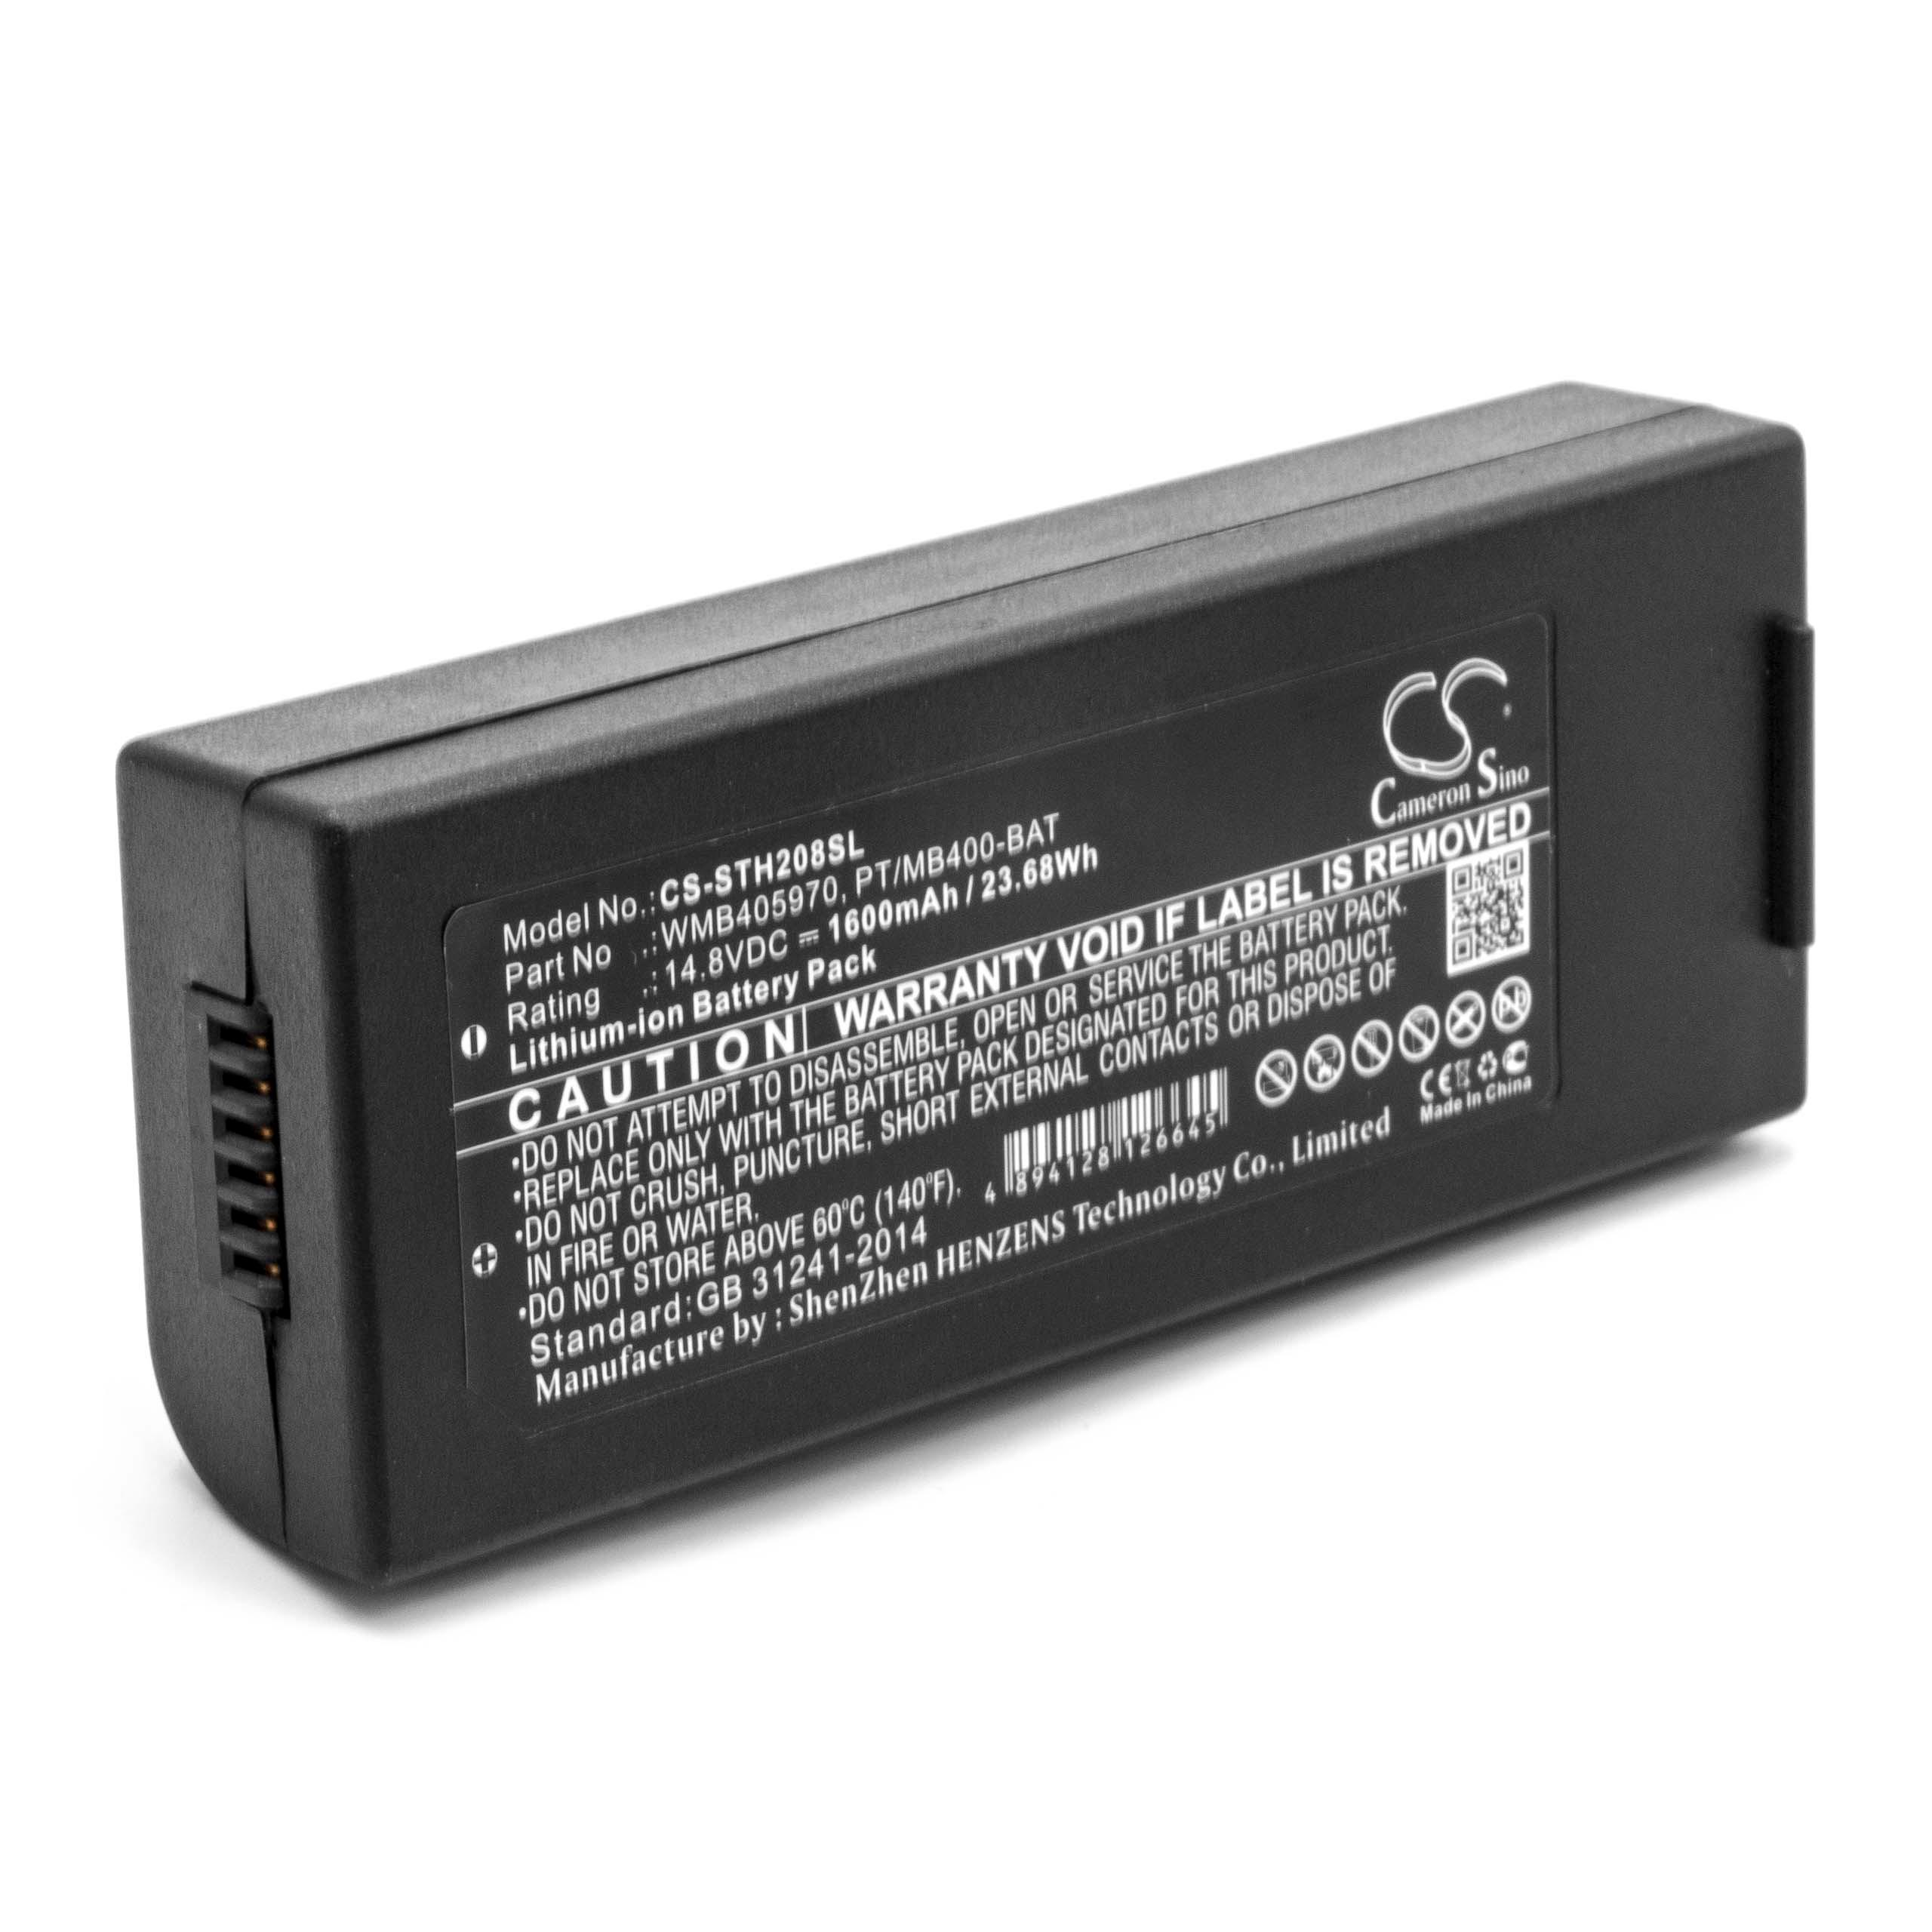 Batería reemplaza WMB405970, PT/MB400-BAT para impresora Lapin - 1600 mAh 14,8 V Li-Ion